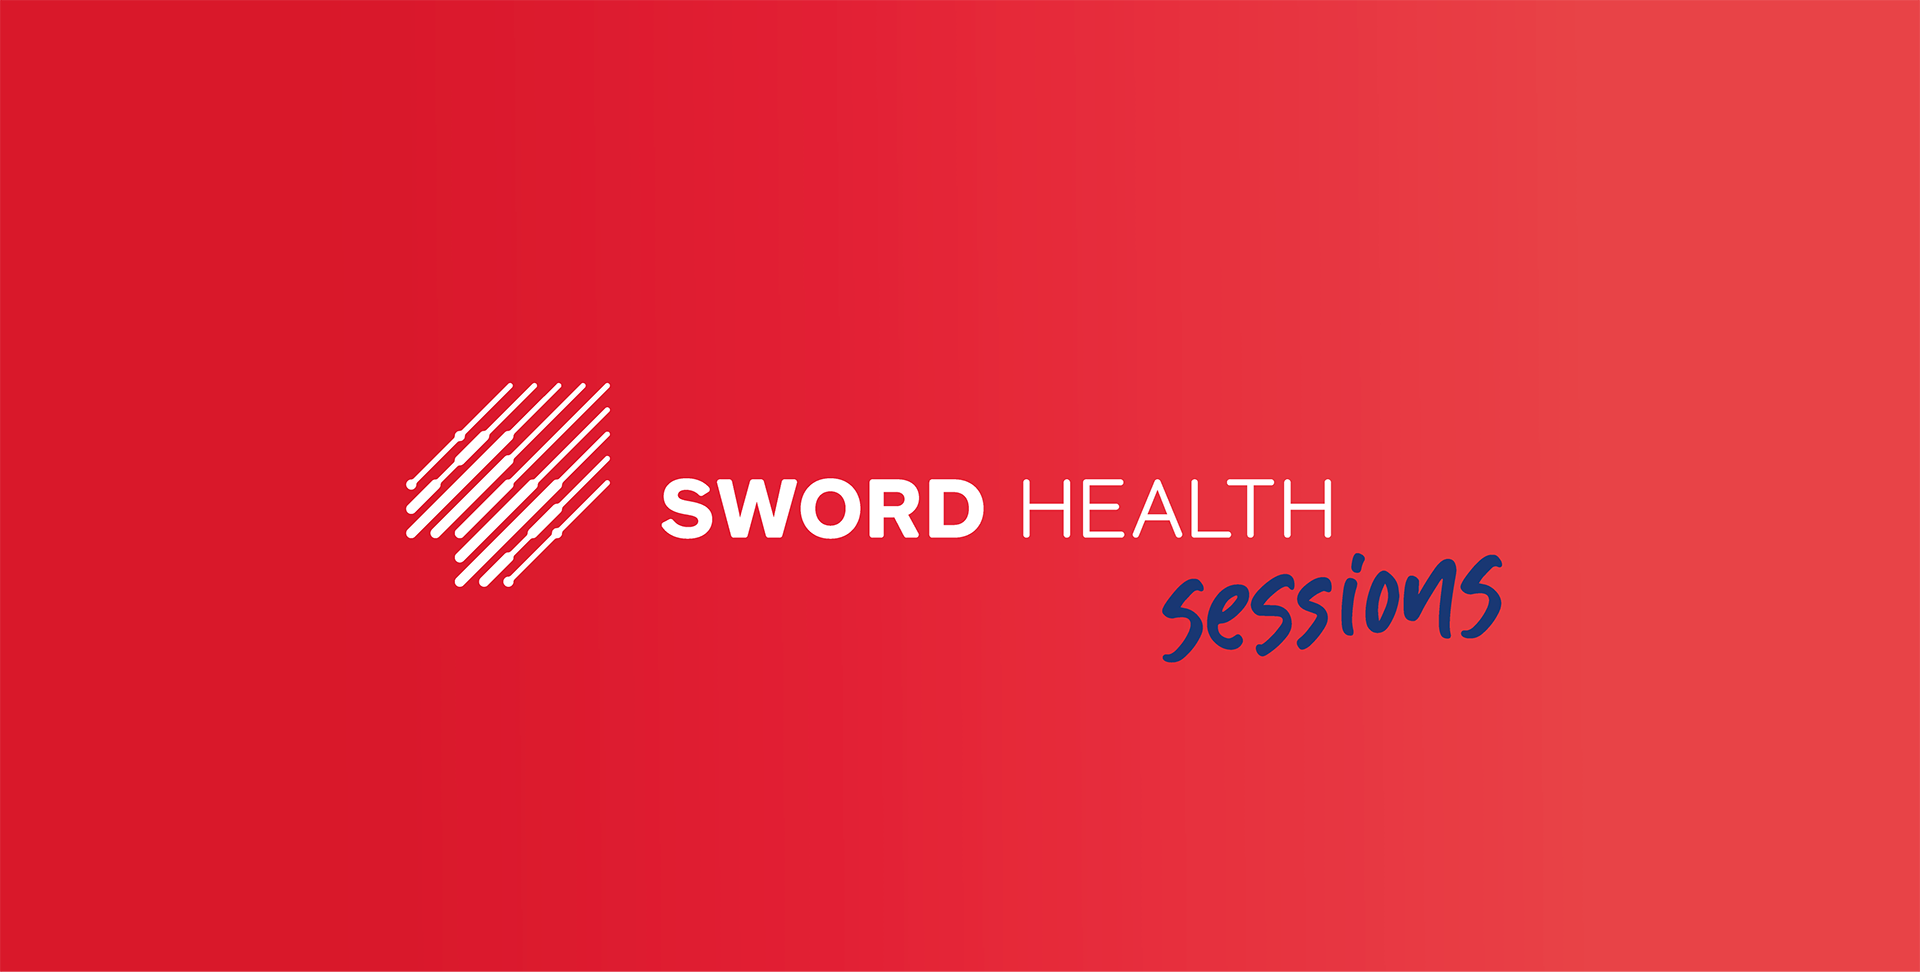 SWORD Health webinar